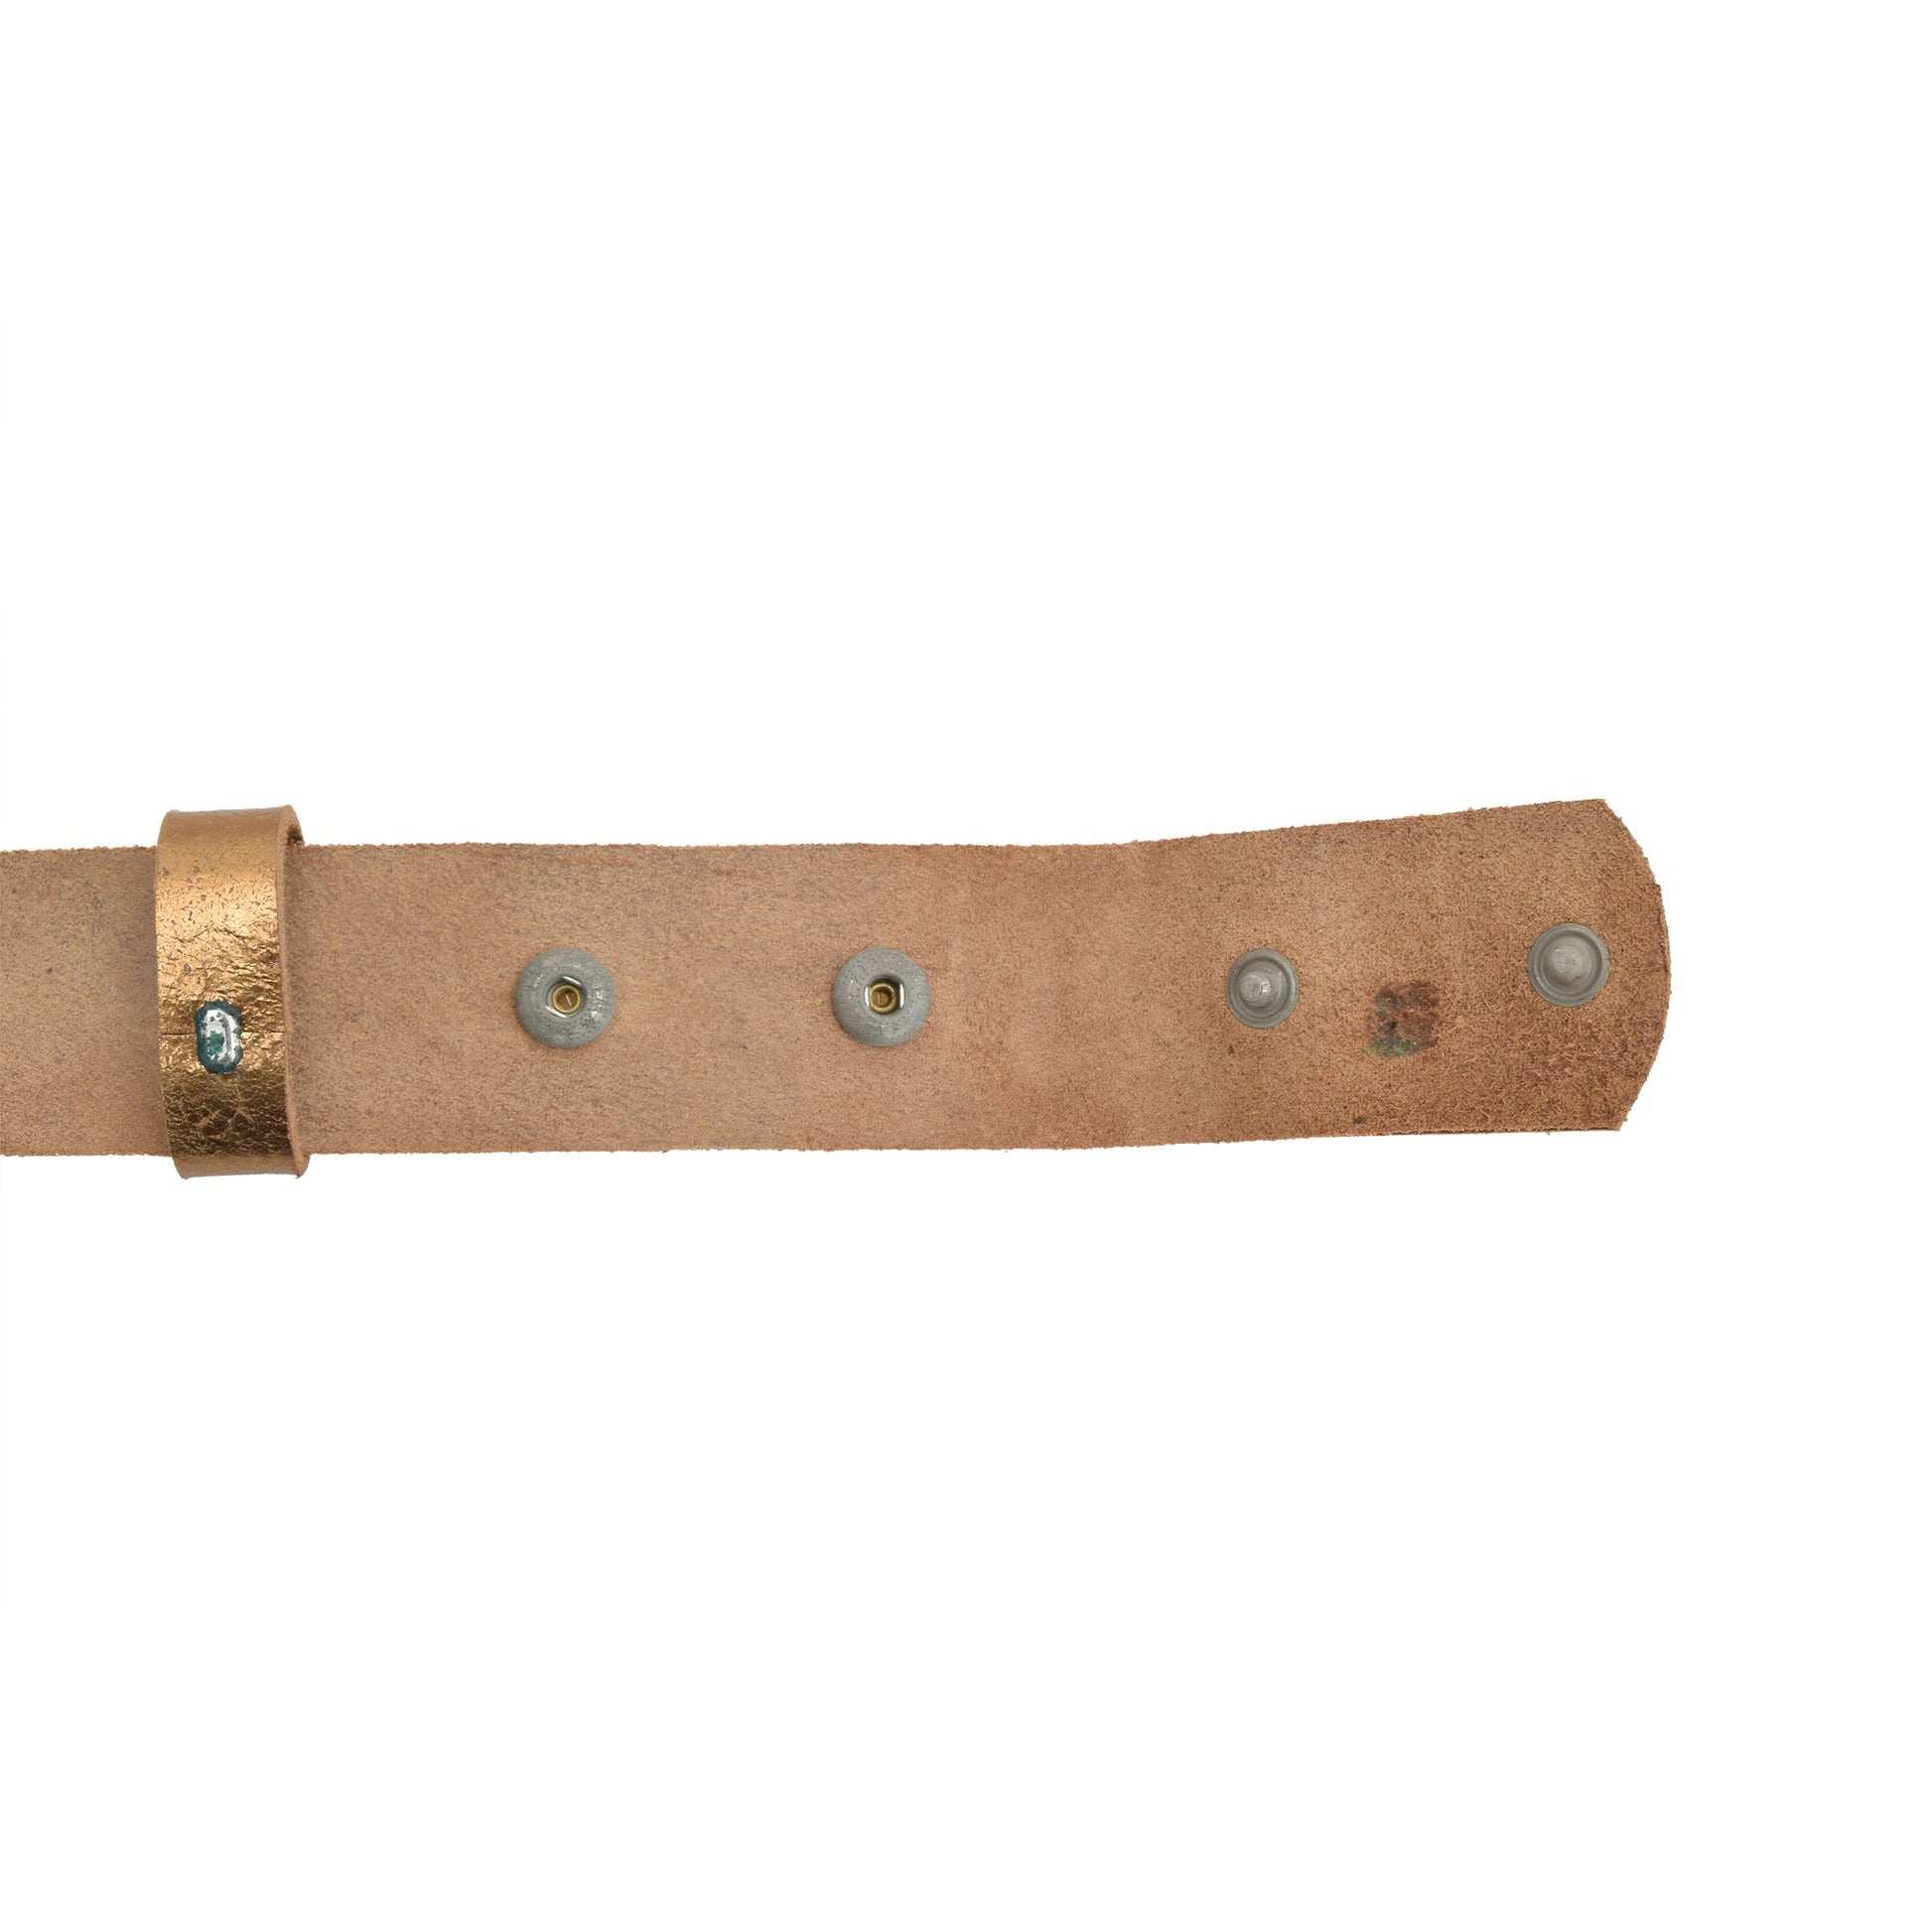 Hesperia Leather Belt Bronz with Changeable Buckle - Belts Zengoda Shop online from Artisan Brands